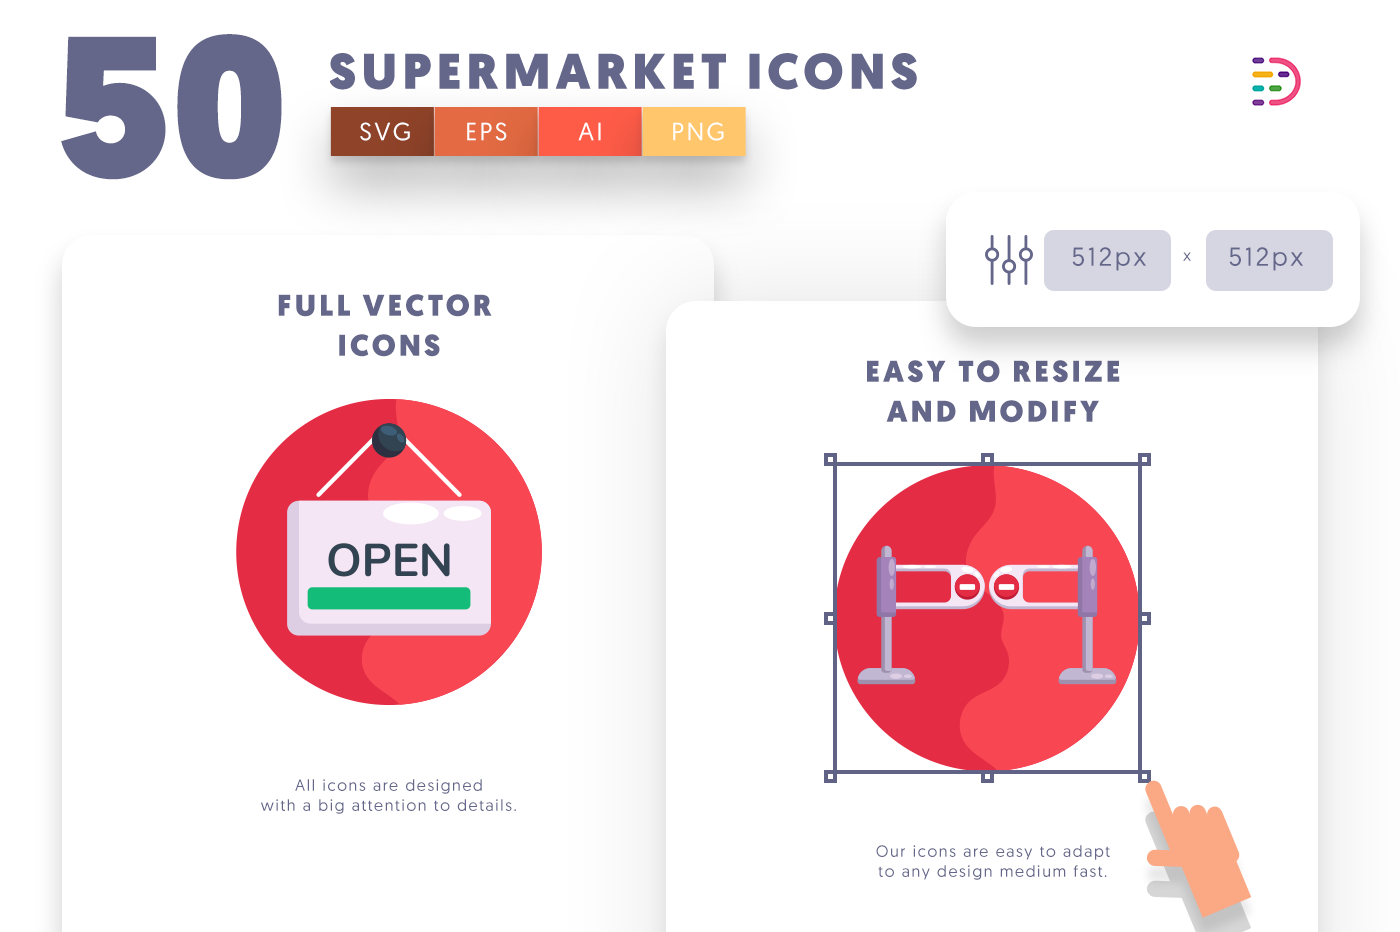 Full vector 50 Supermarket Icons